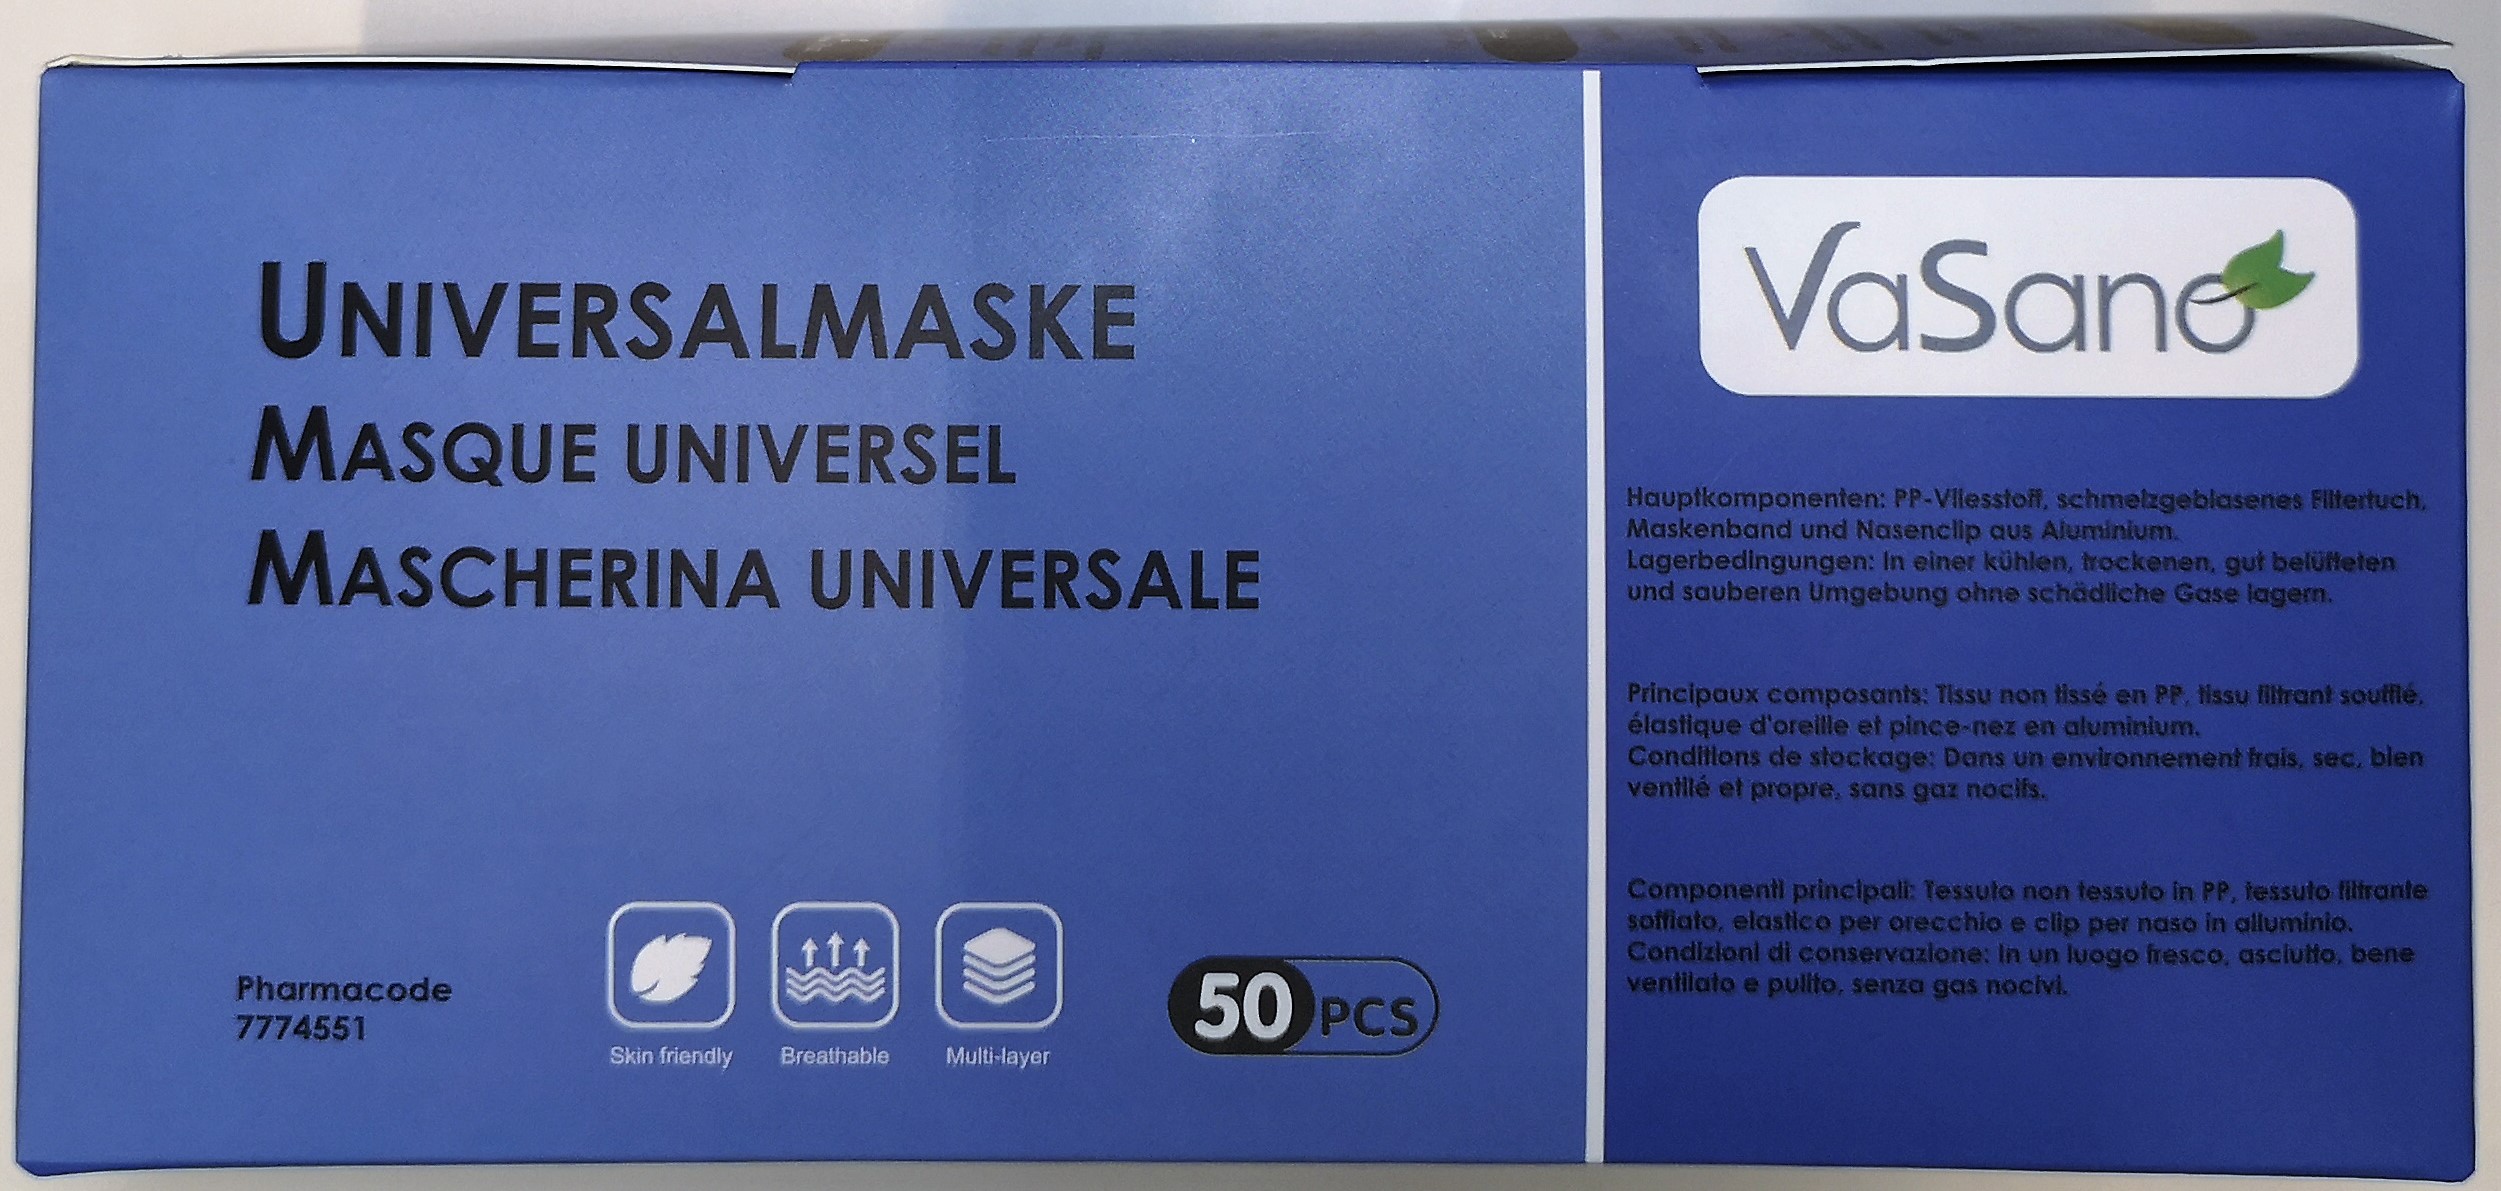 VaSano Universalmaske 3-schichtig 50 Stk Blau